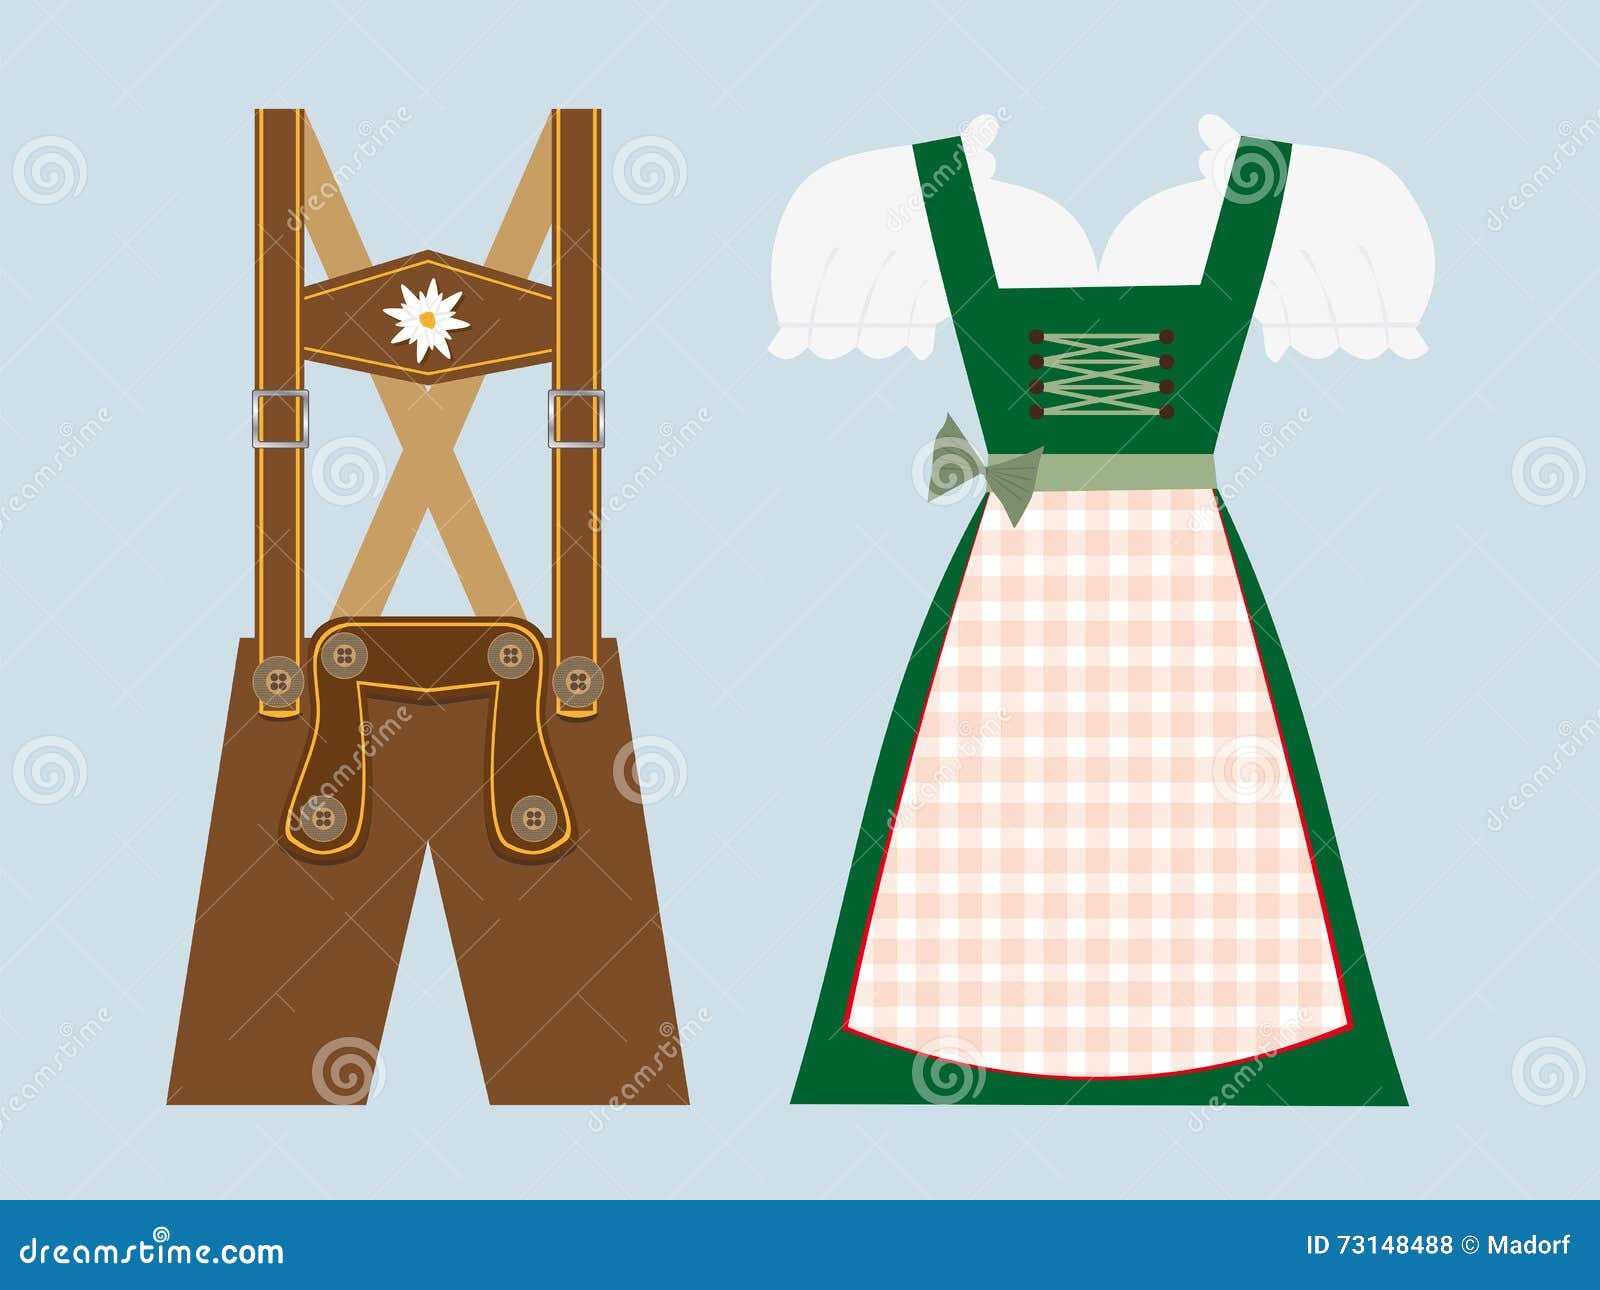 lederhosen and dirndl, bavarian oktoberfest clothing